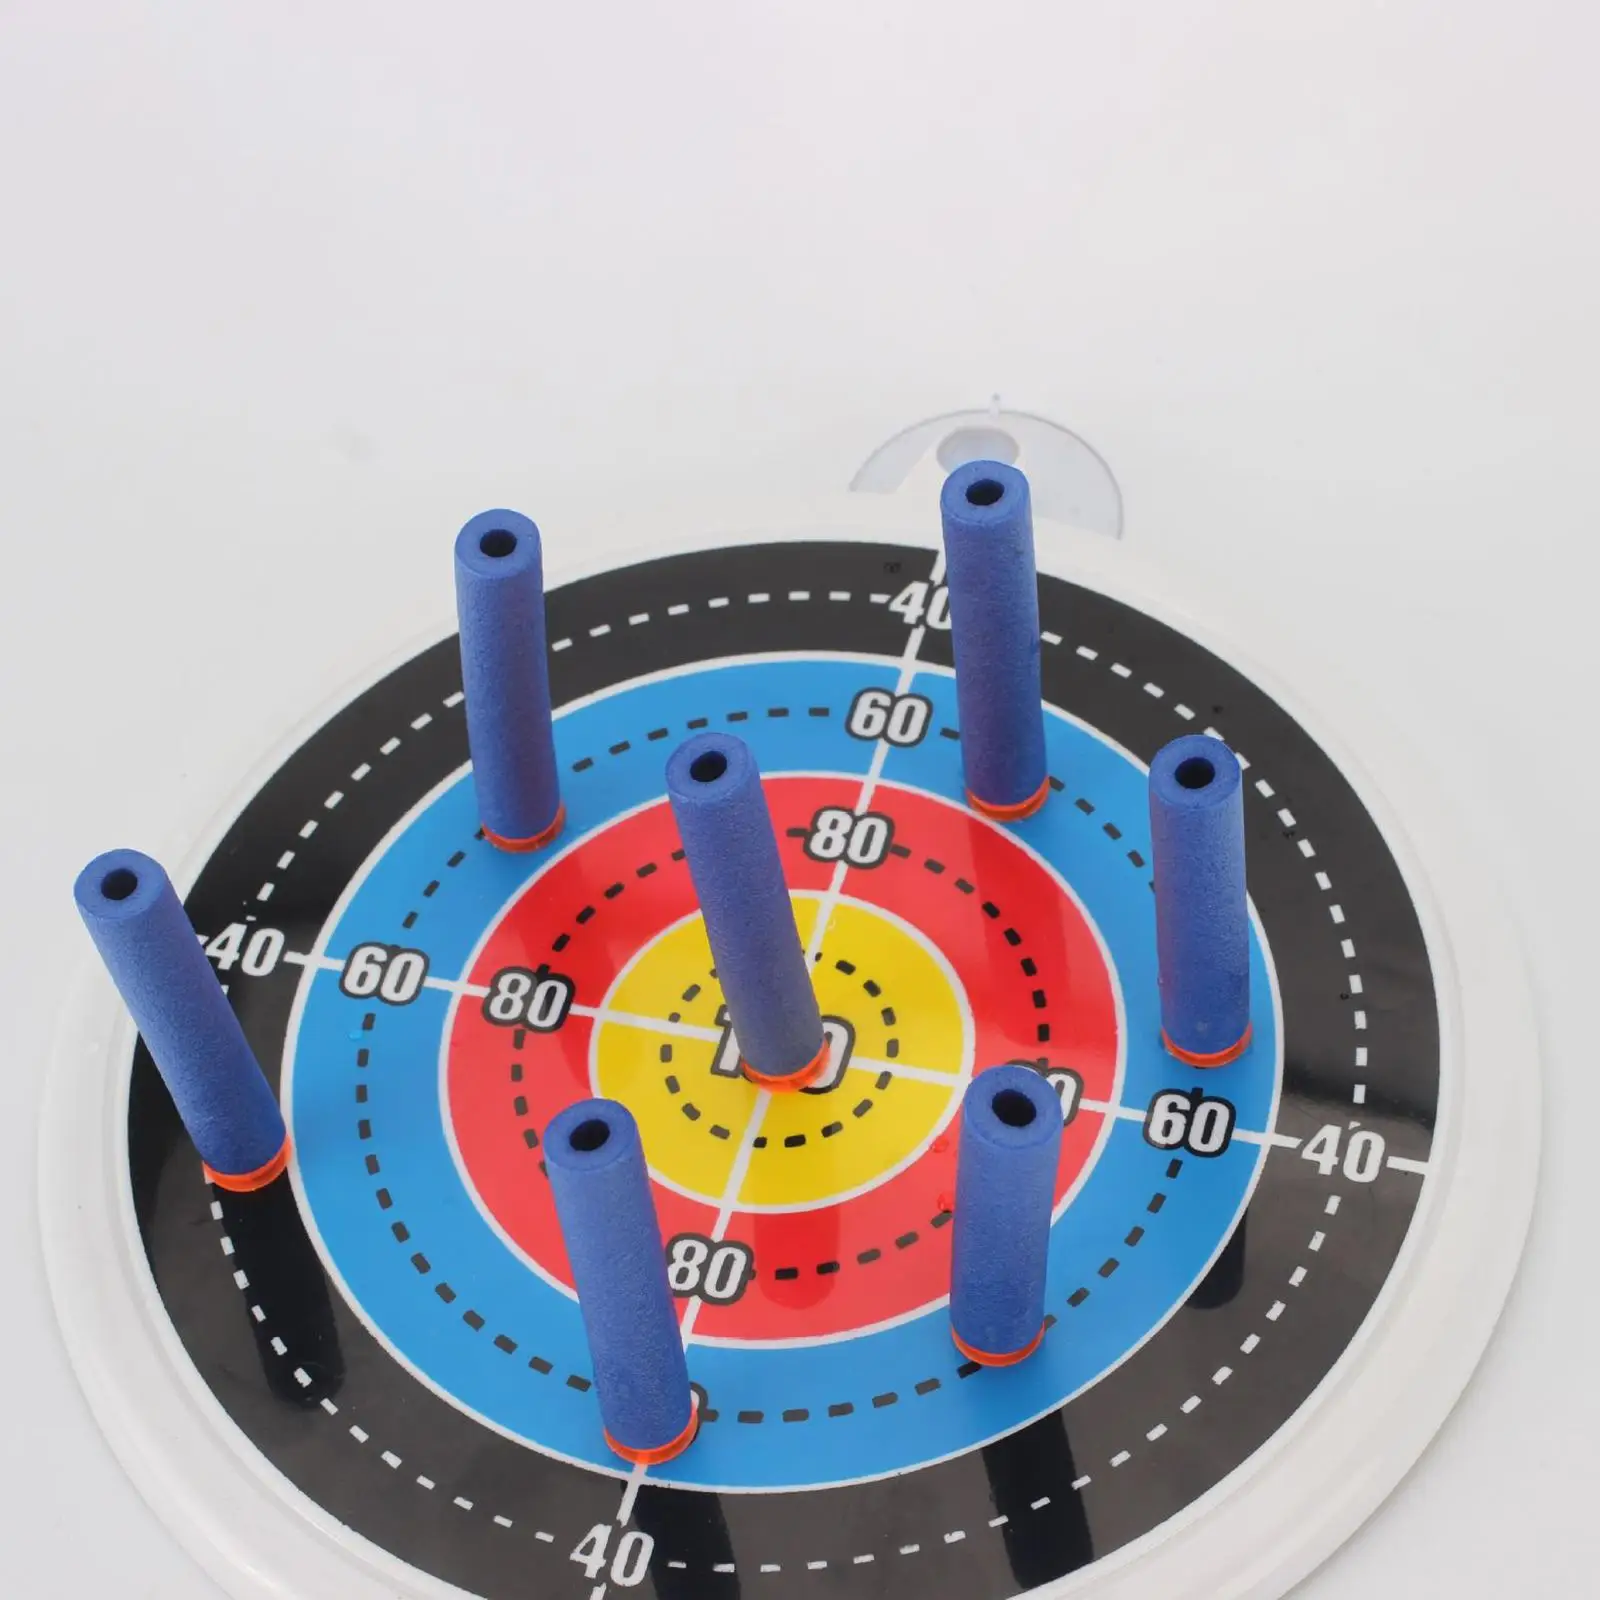 Hanging Target Coloured Target Suction Cup Shooting Game Target Board for Kids Children Boys Girls Practice Indoor Outdoor